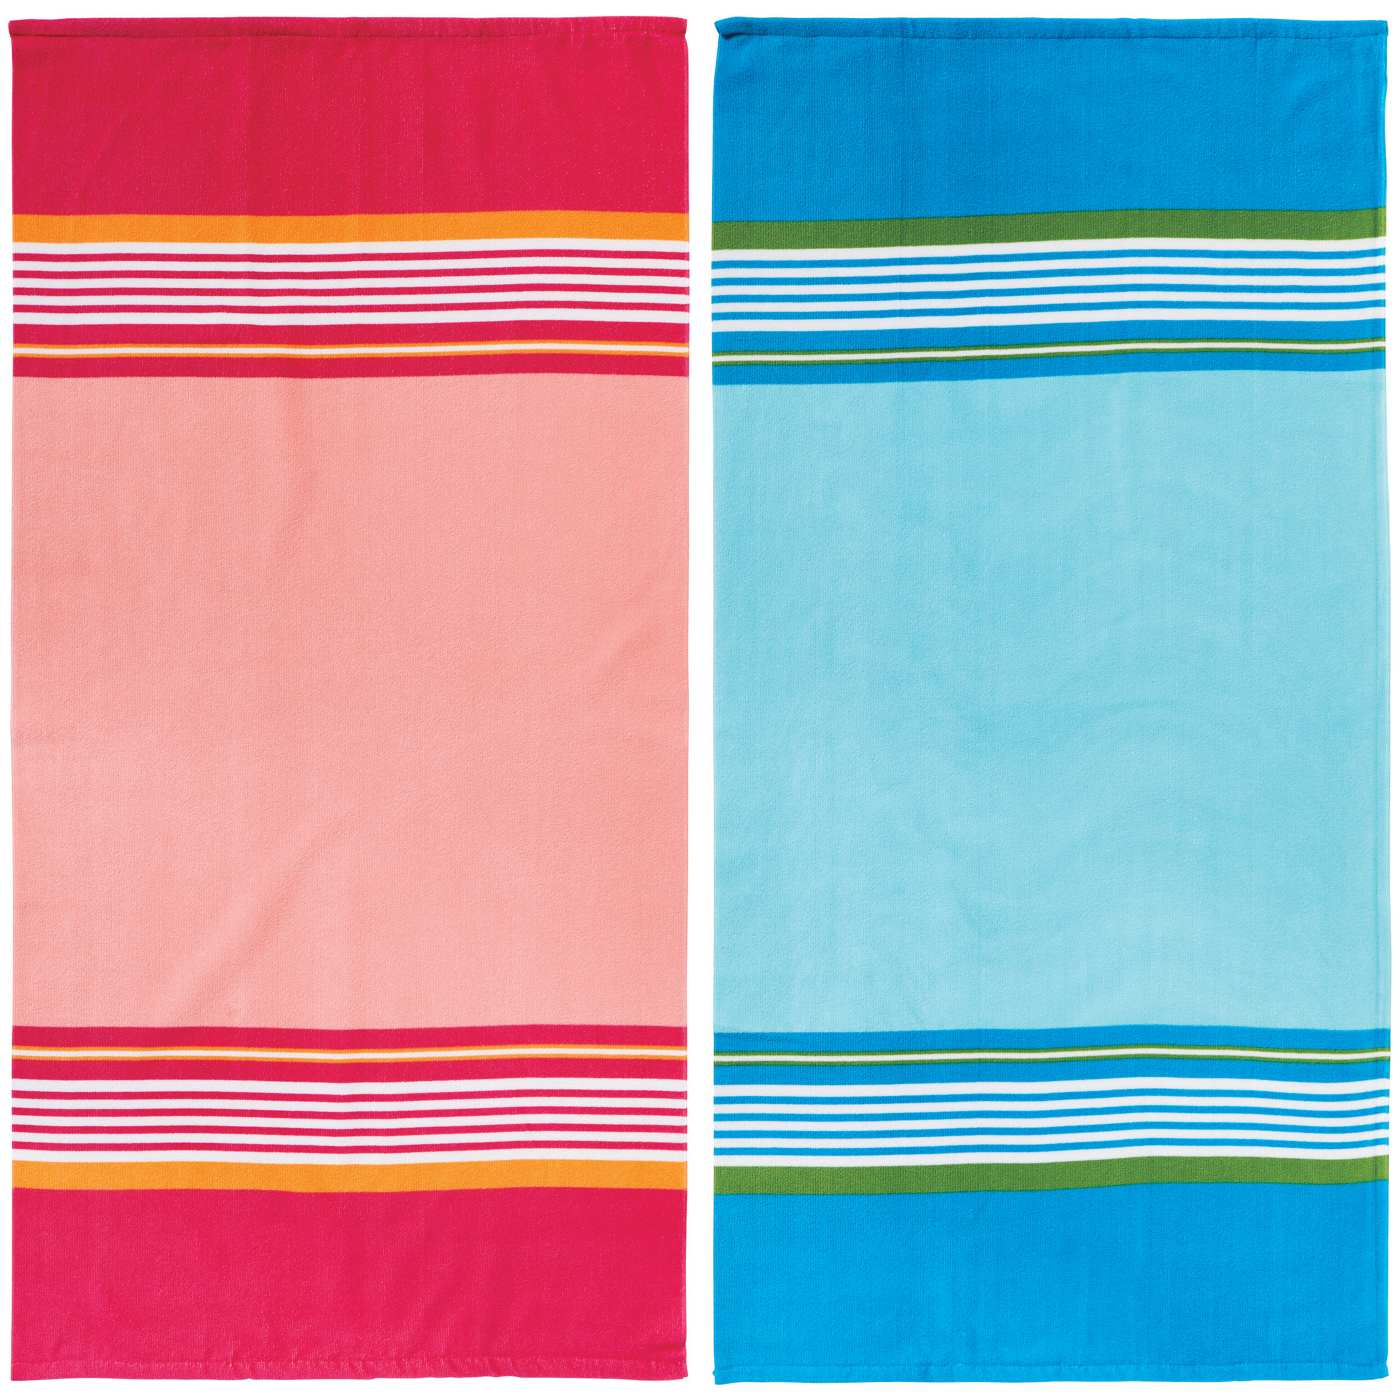 Destination Holiday Striped Beach Towel Set - Pink & Blue, 2 Pk; image 1 of 2